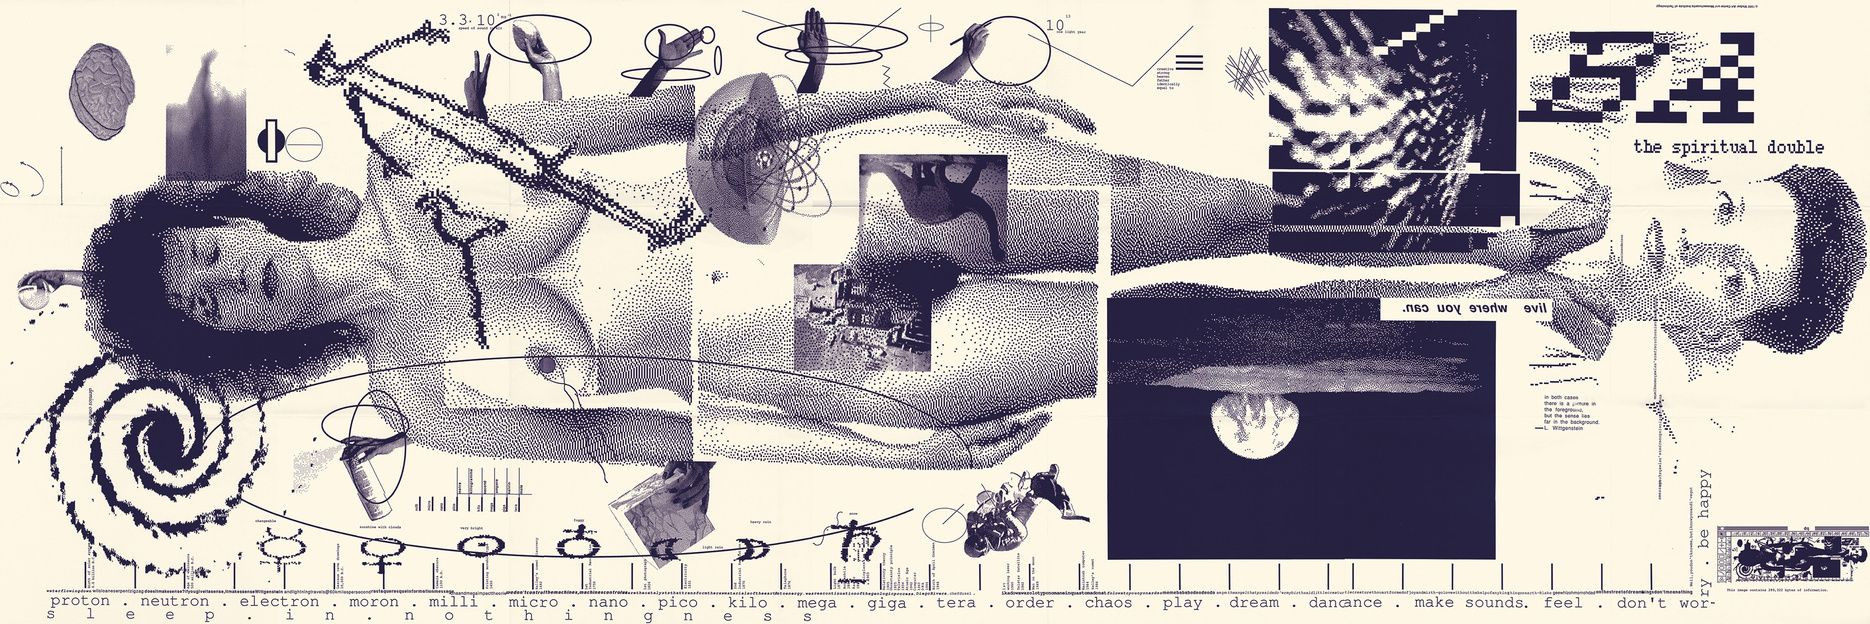 fig.7: April Greiman Design Quarterly issue 133 poster, 1986